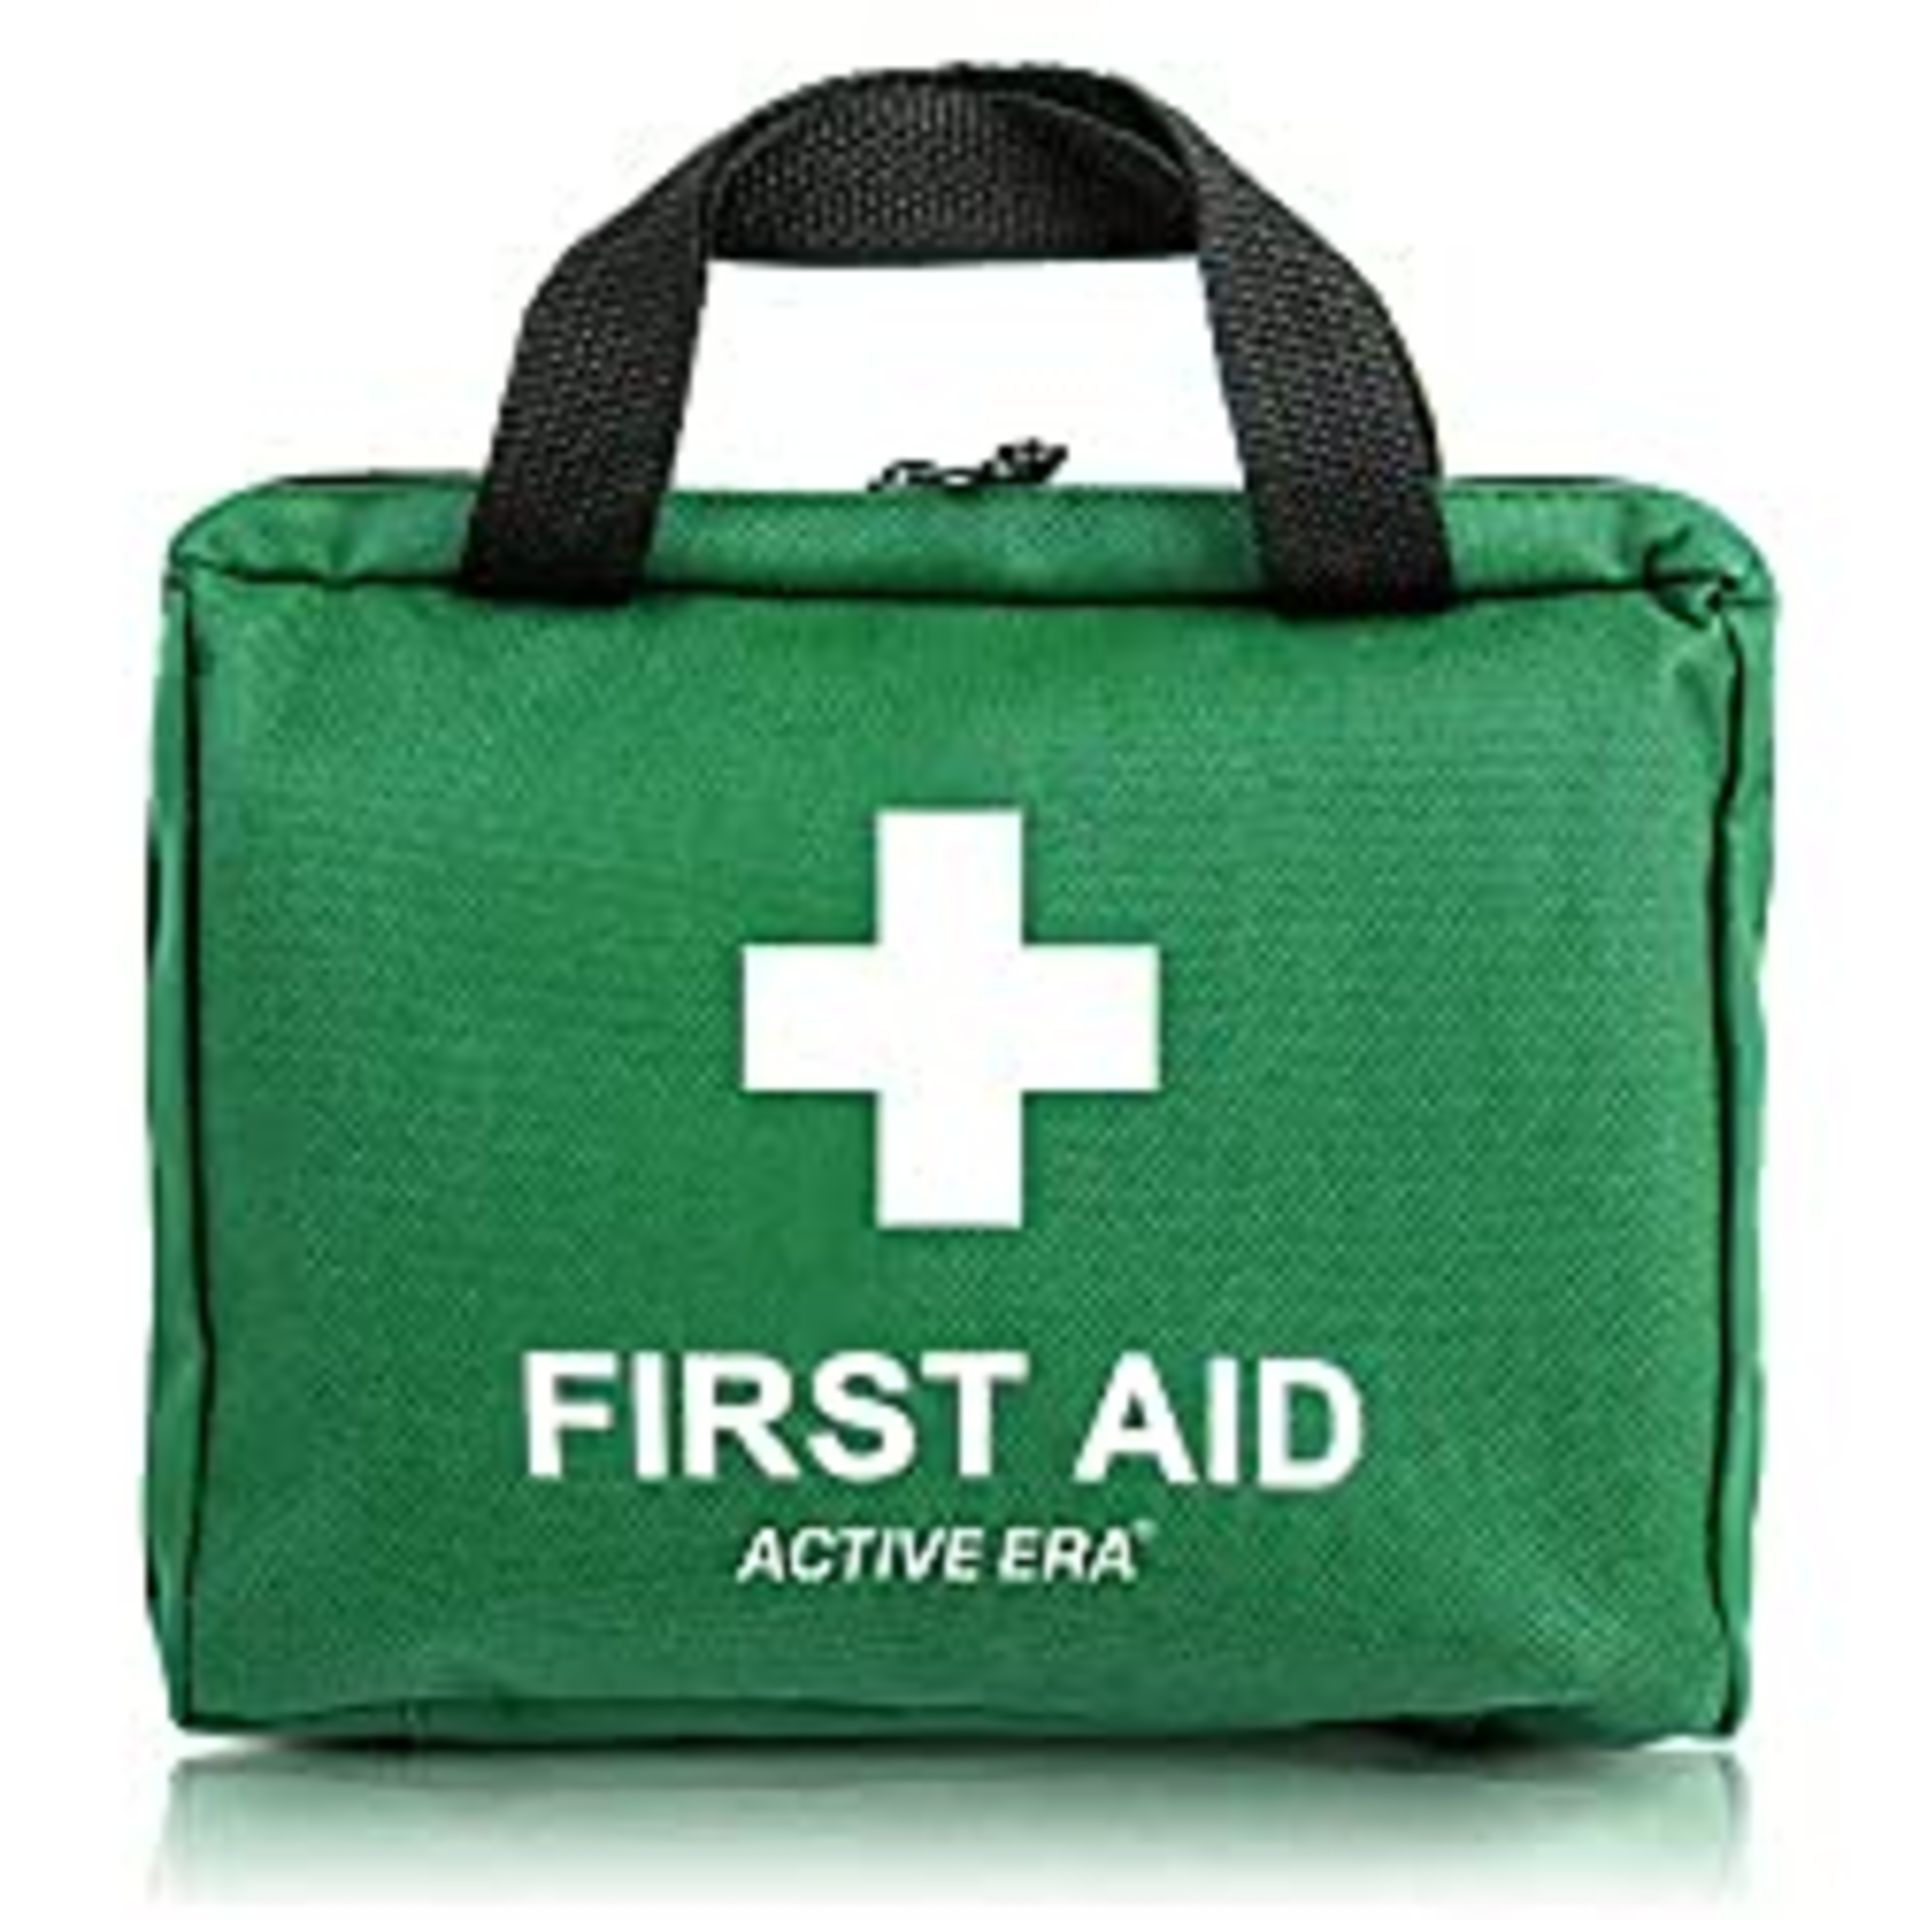 RRP £19.99 90 Piece Premium First Aid Kit Bag - Includes Eyewash